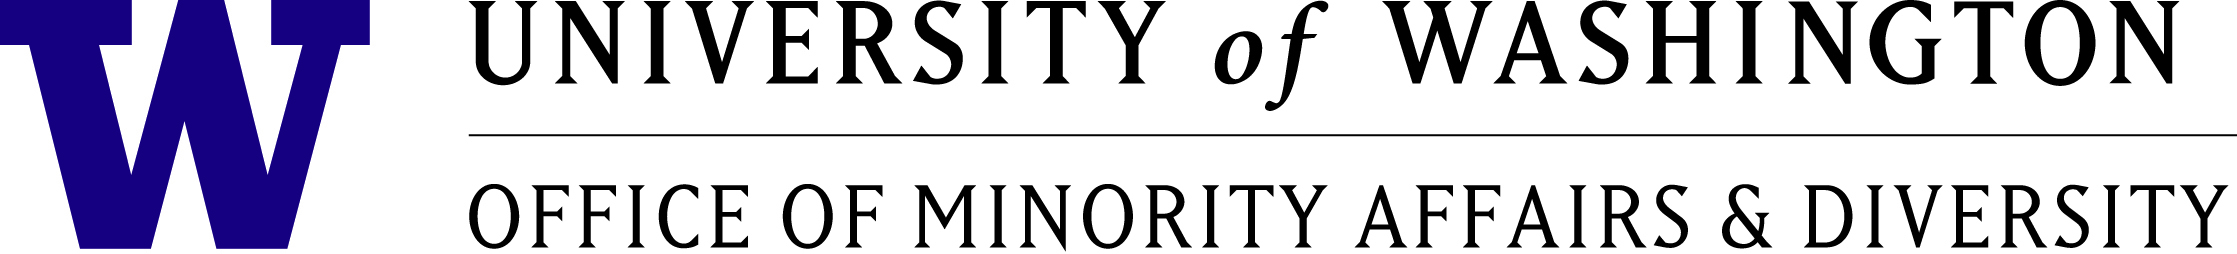 University of Washington Office of Minority Affairs & Diversity (OMAD)